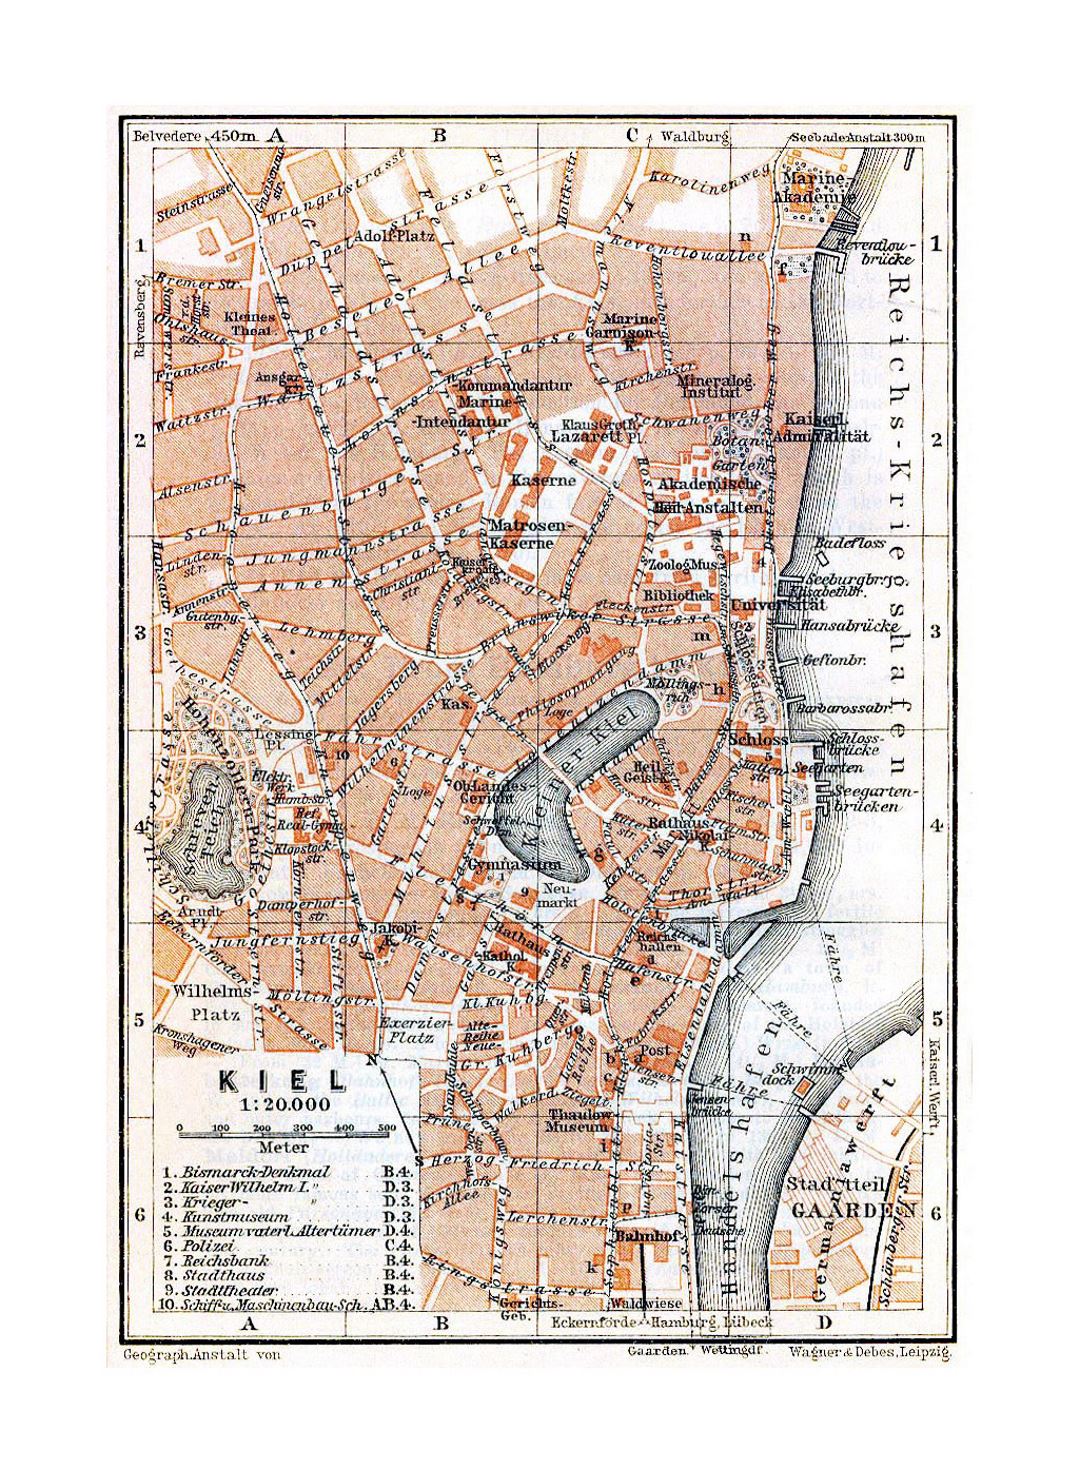 Detailed old map of Kiel city - 1910